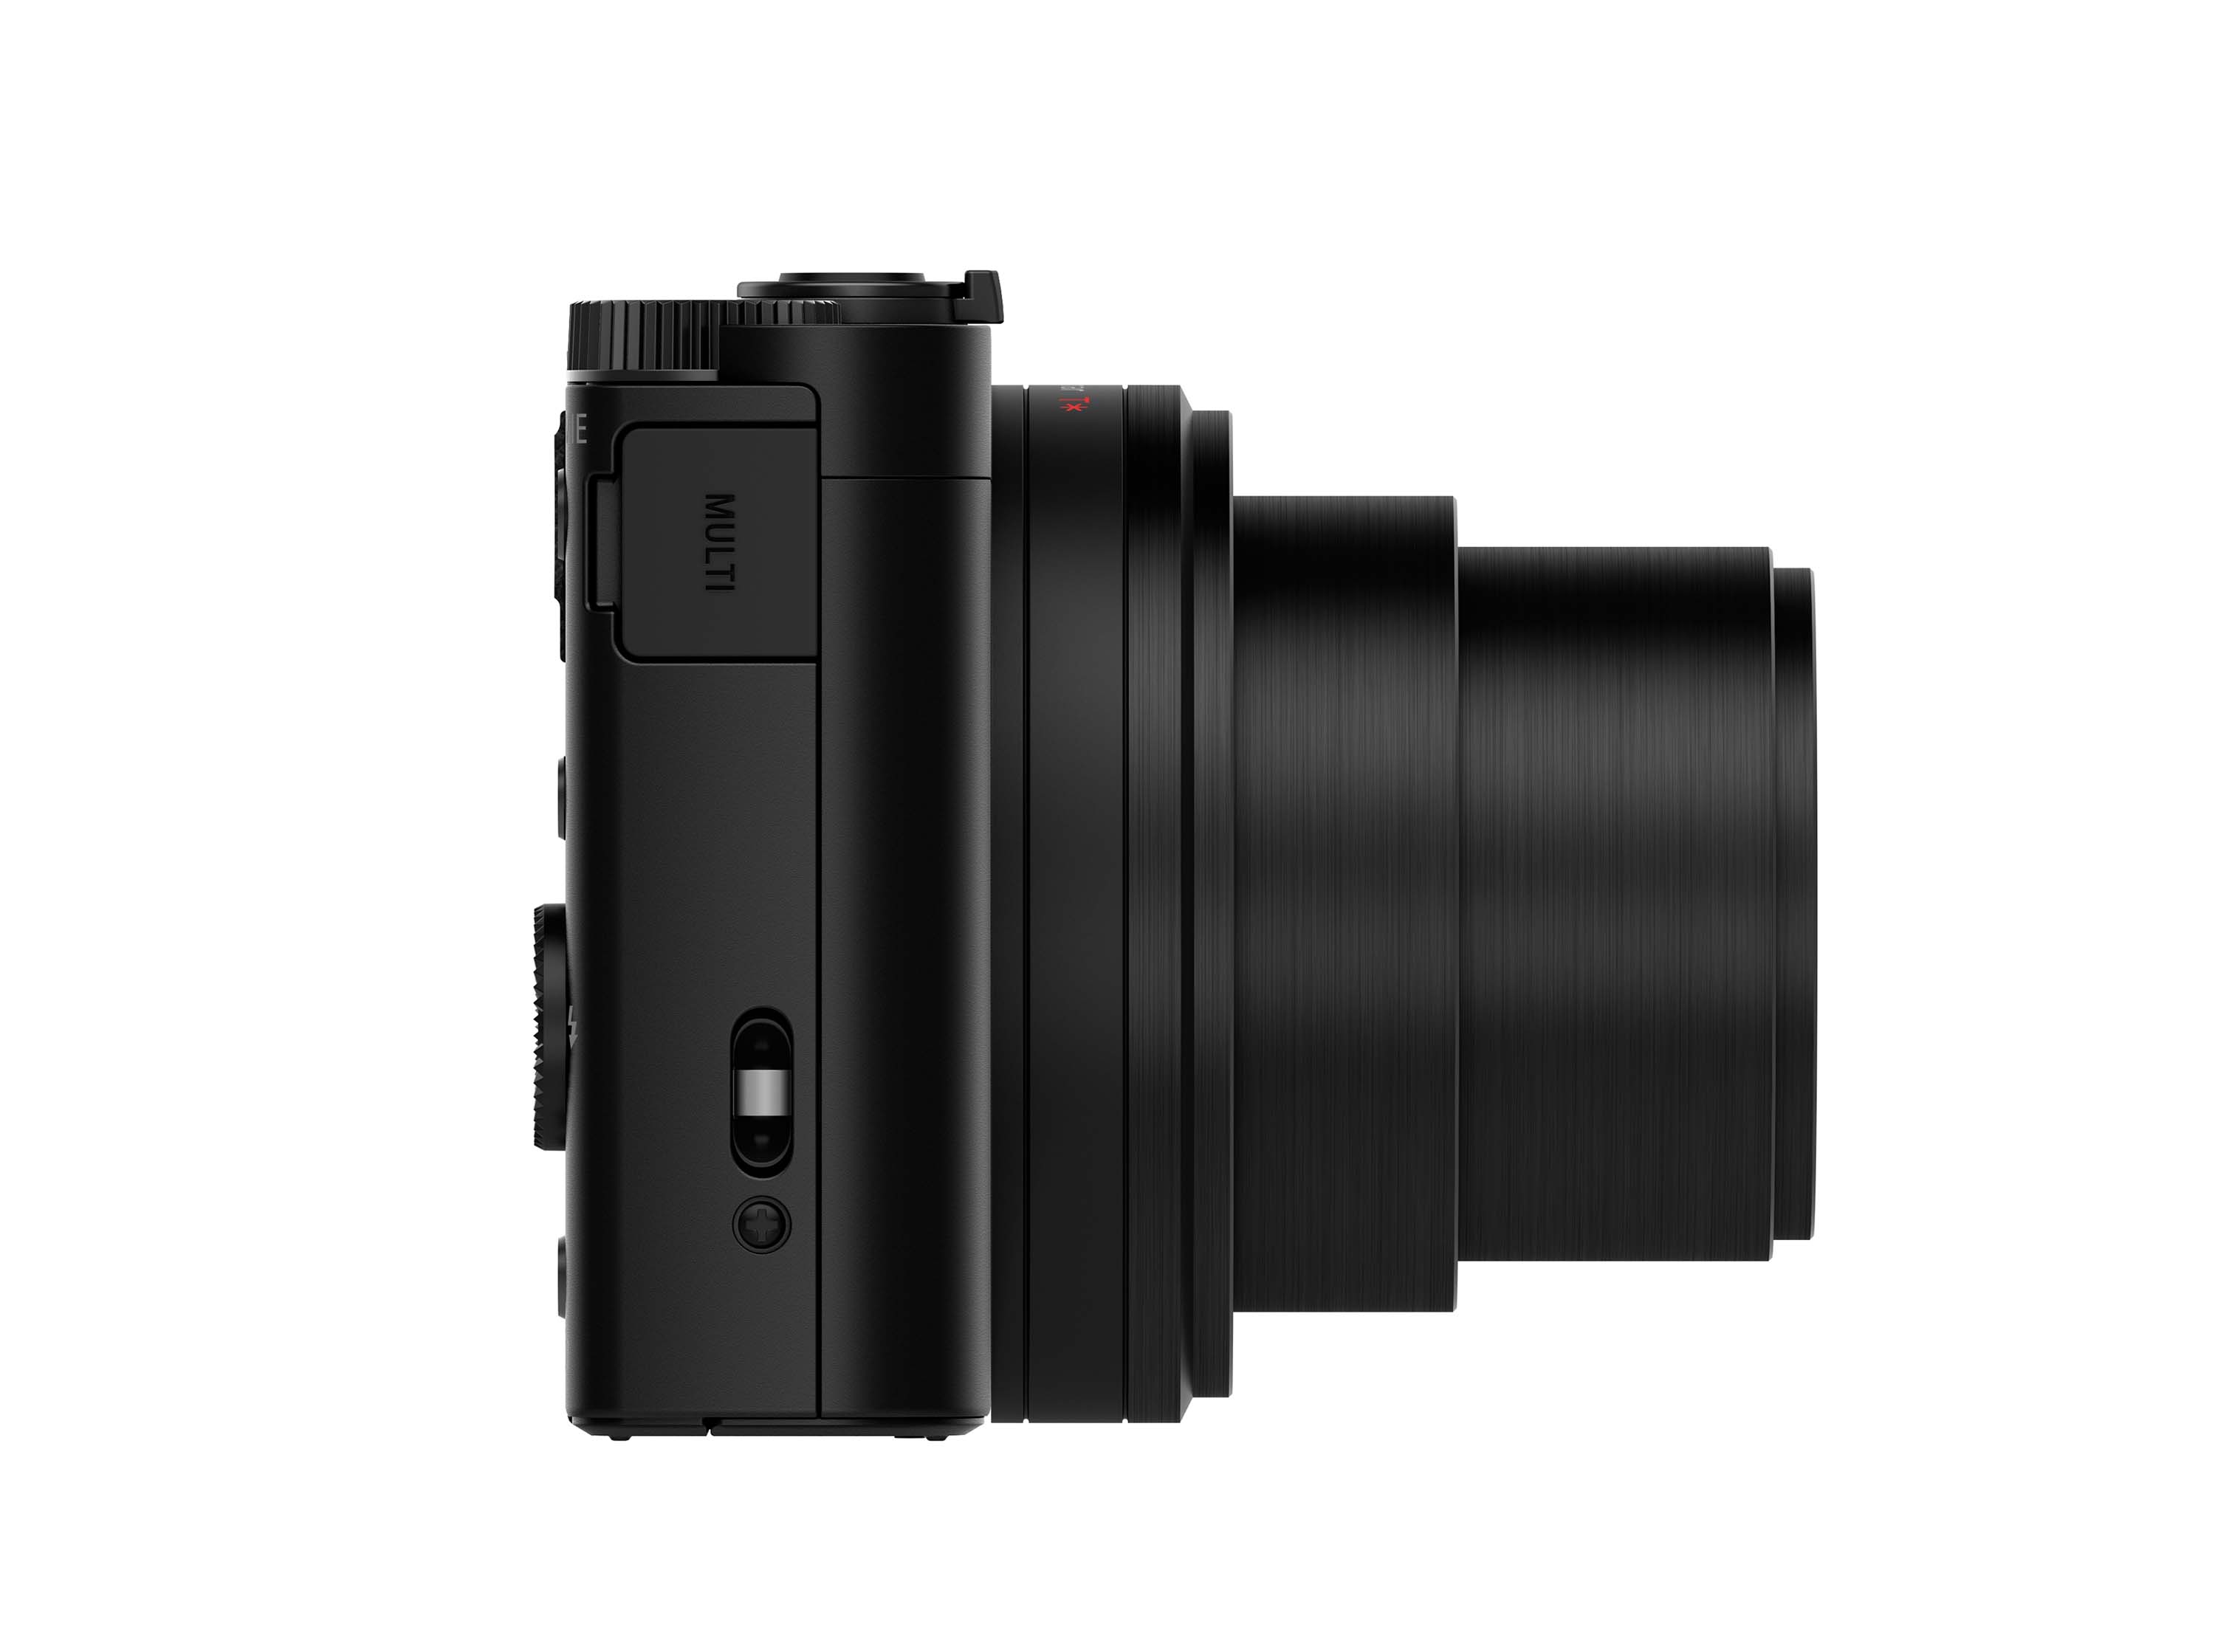 WX500 - Cyber-shot 數位相機- Sony 台灣官方購物網站- Sony Store 